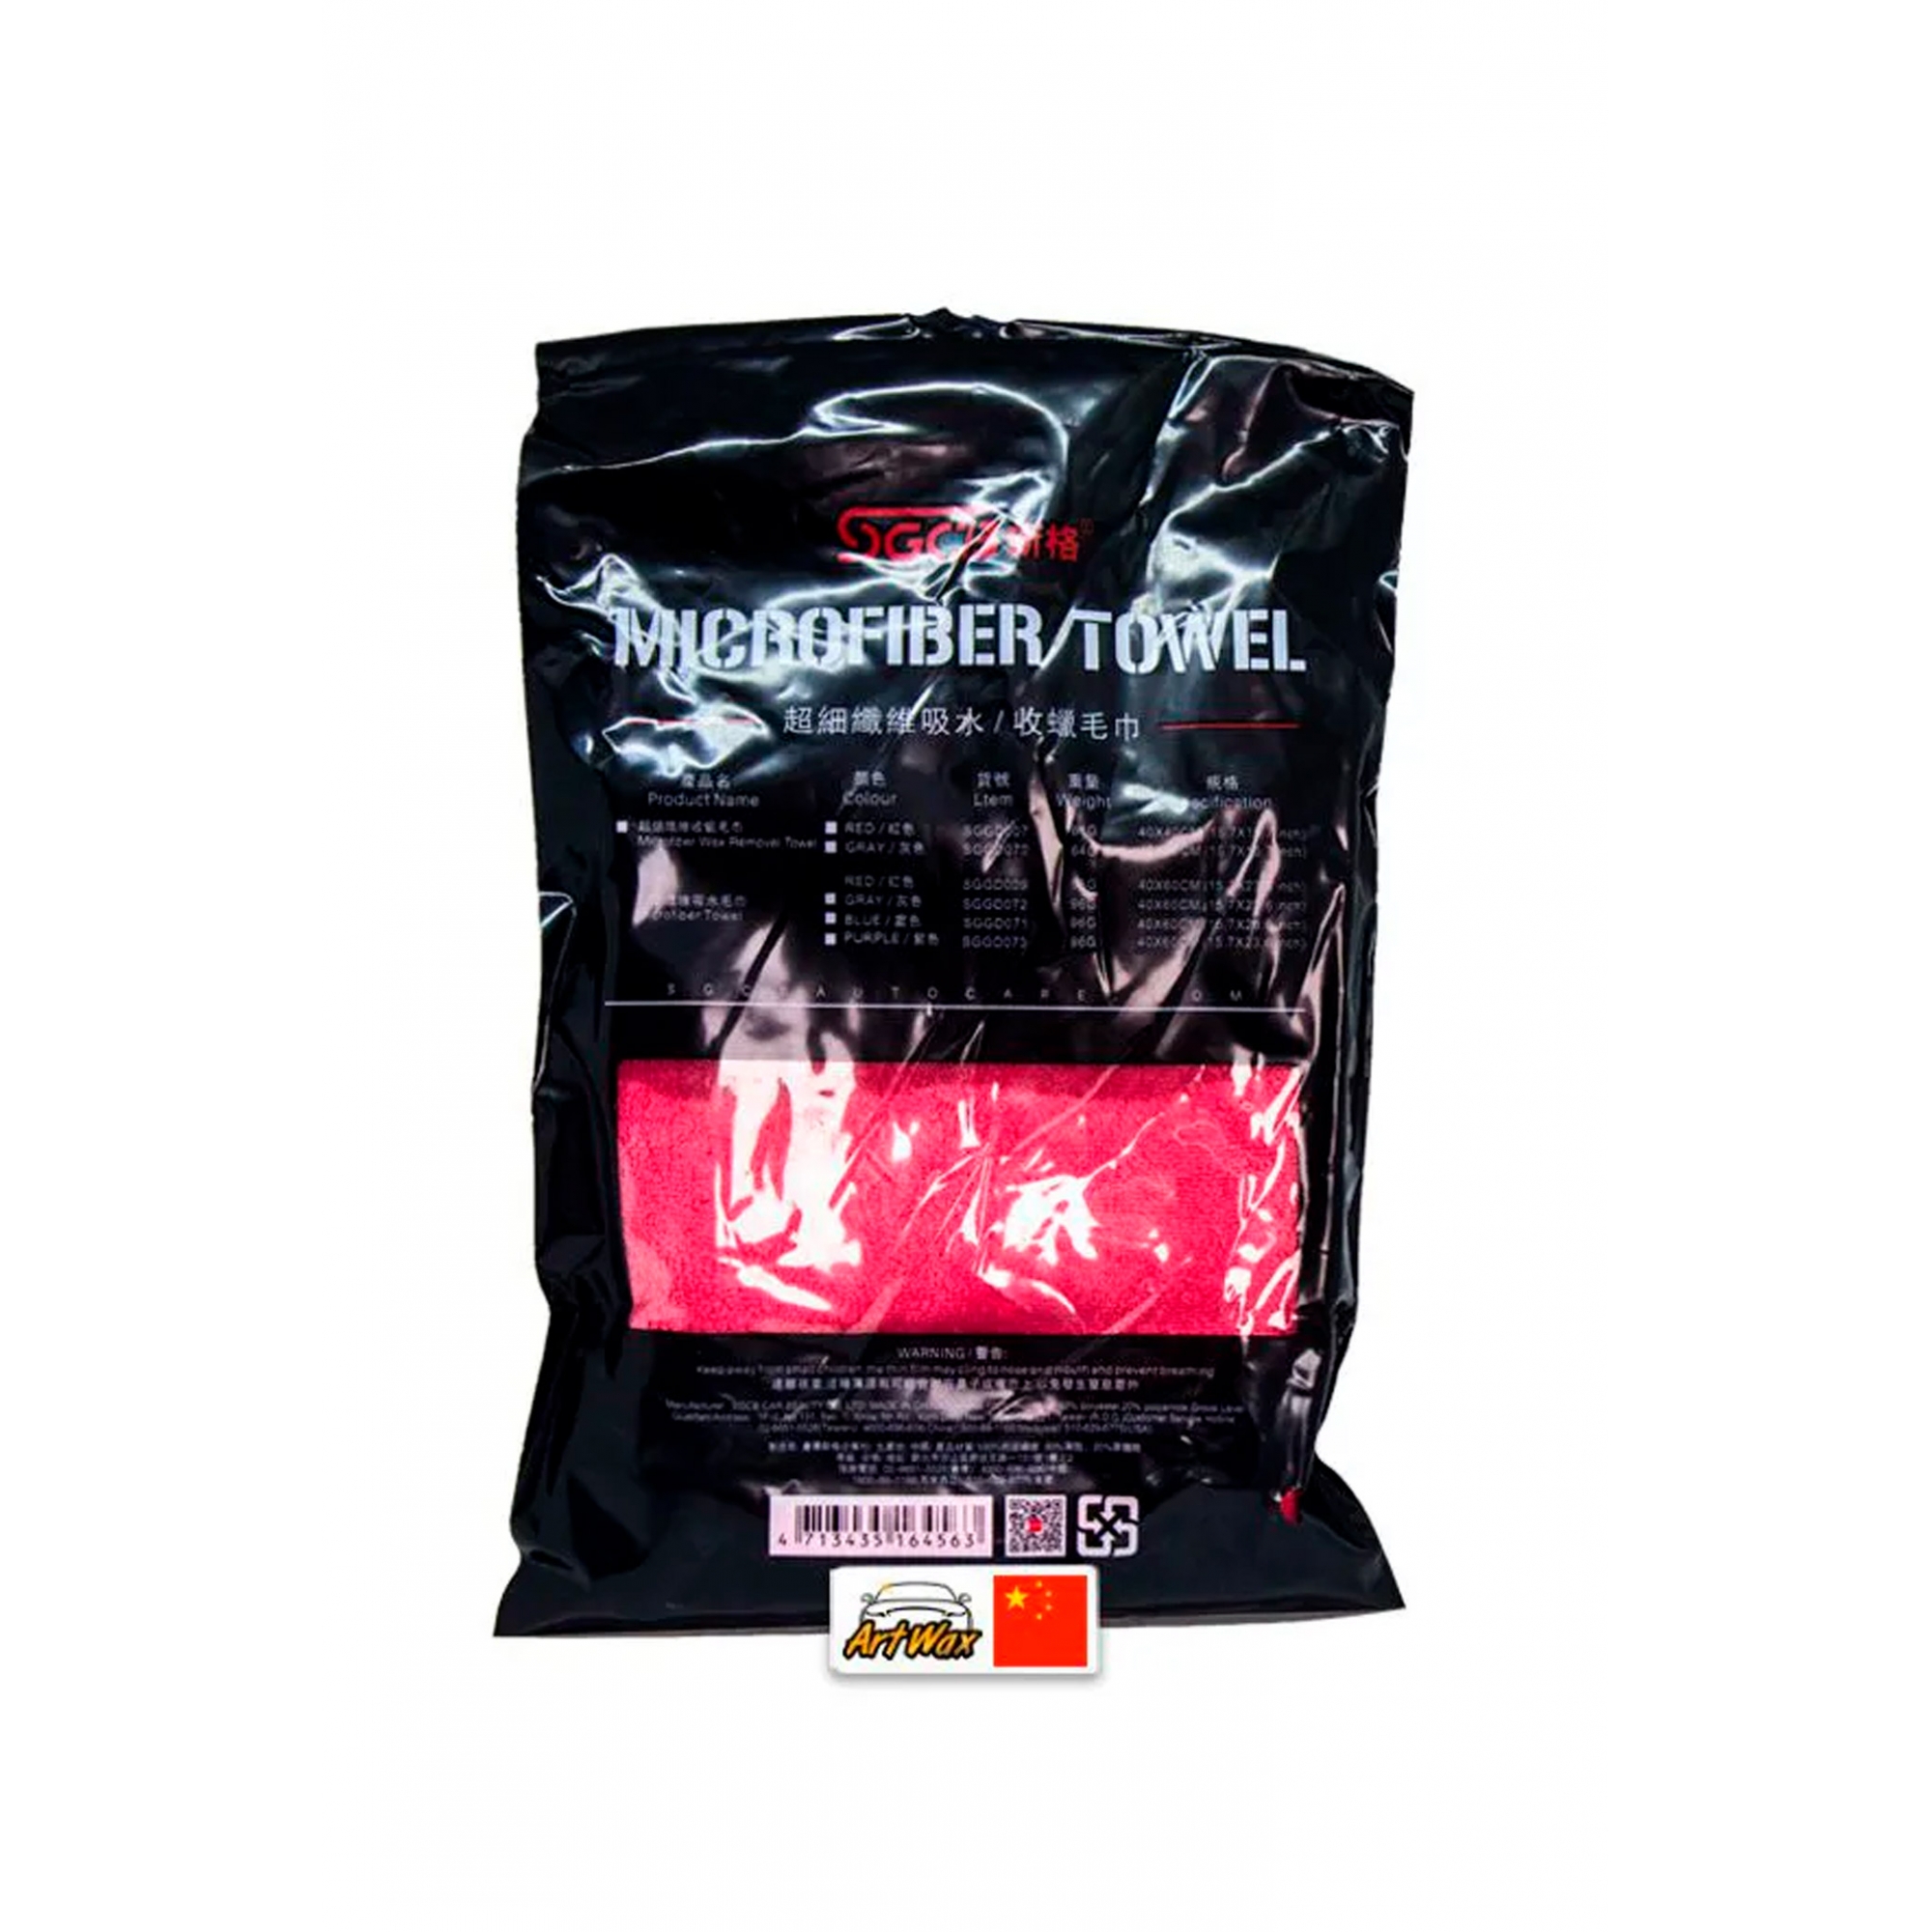 Toalha de Microfibra Vermelha DB Towel 40x40cm - 350gsm Dub Boyz